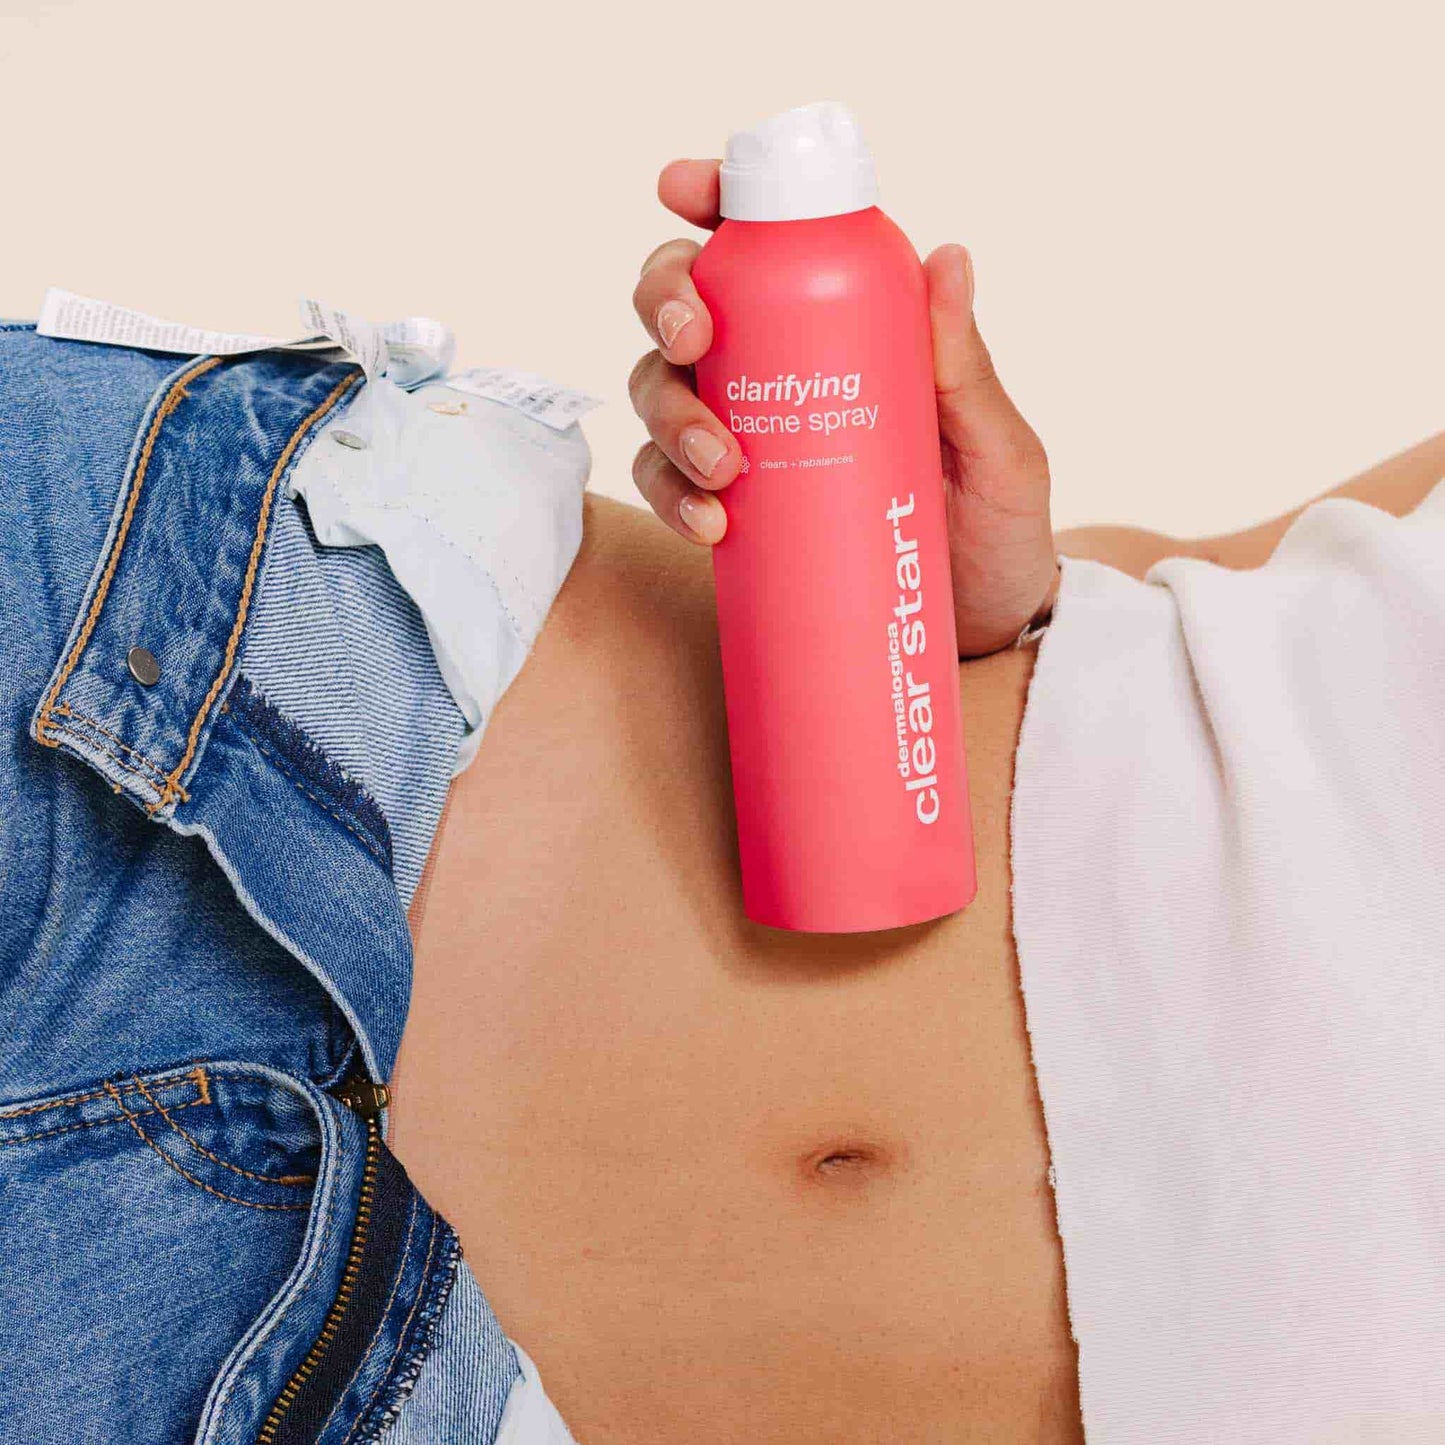 Model holding Clarifying Bacne Spray against stomach